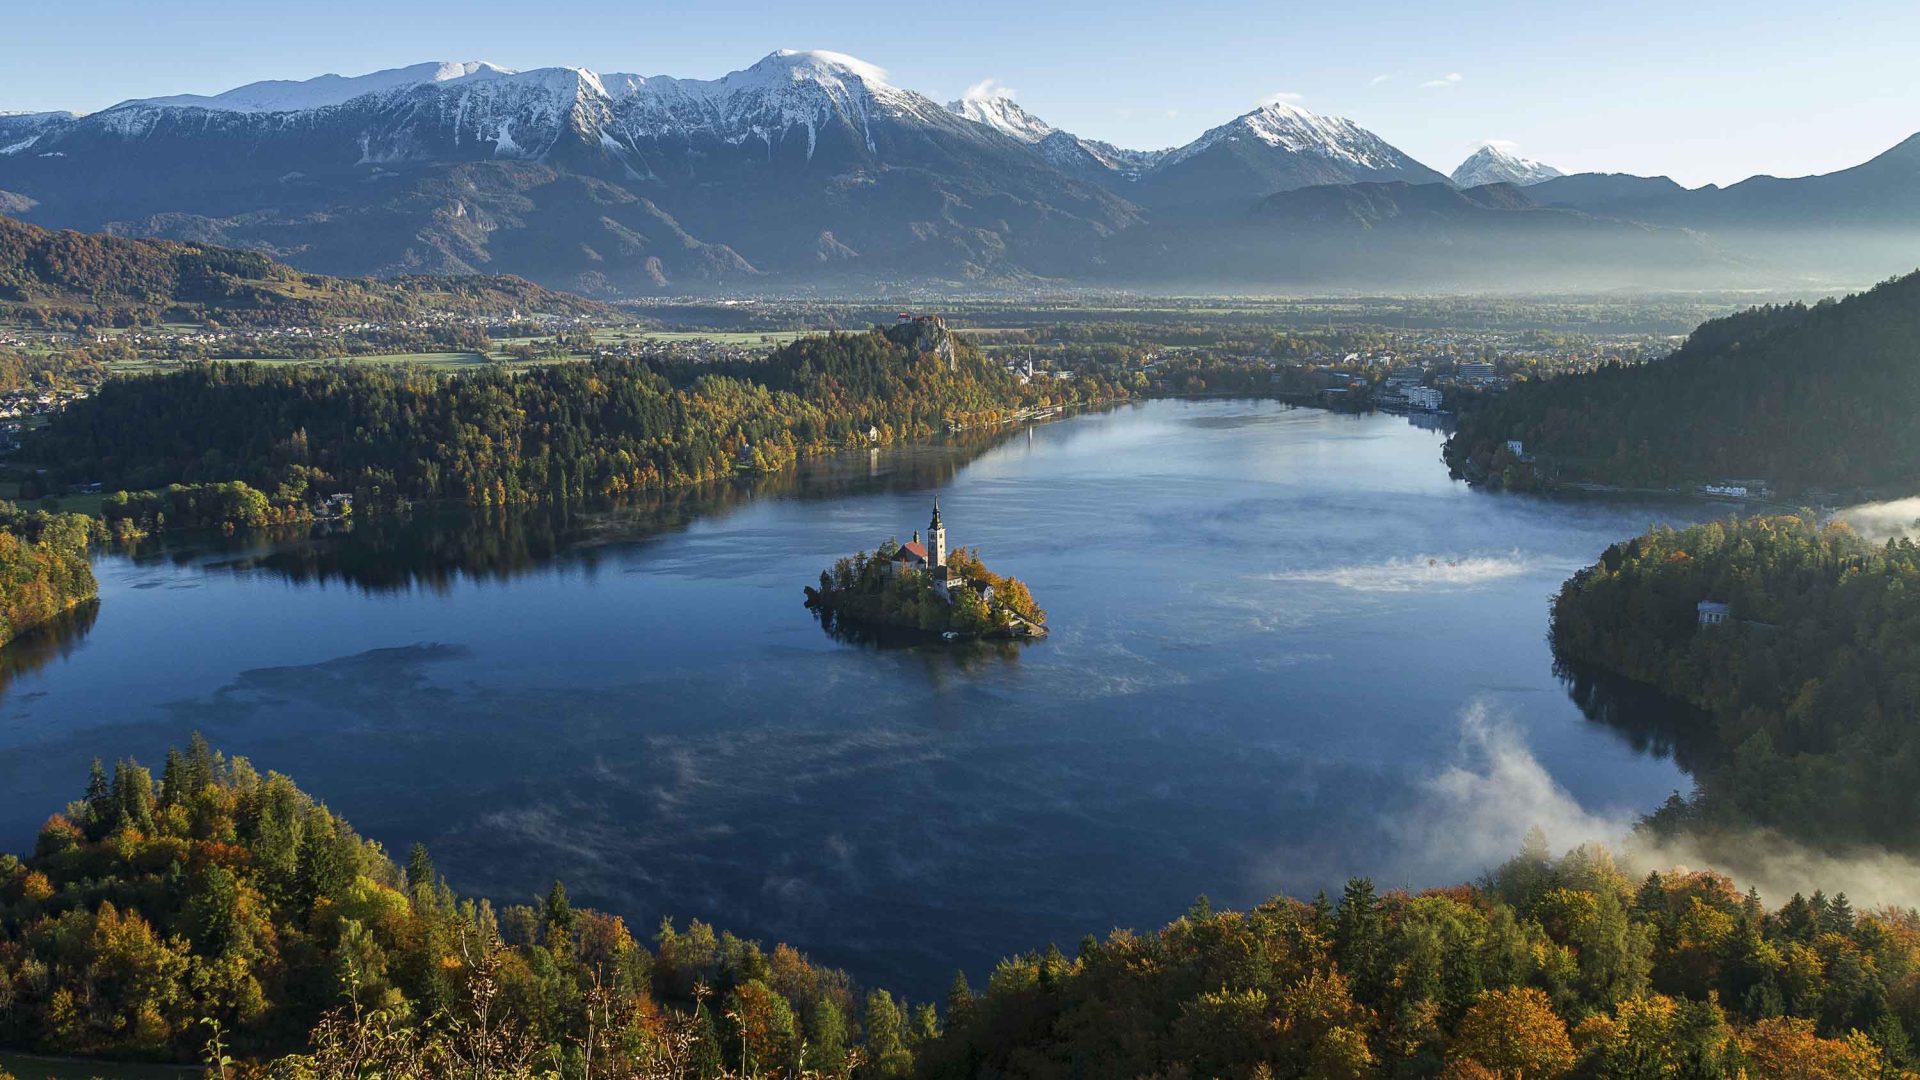 A way of life: How Slovenia got so green